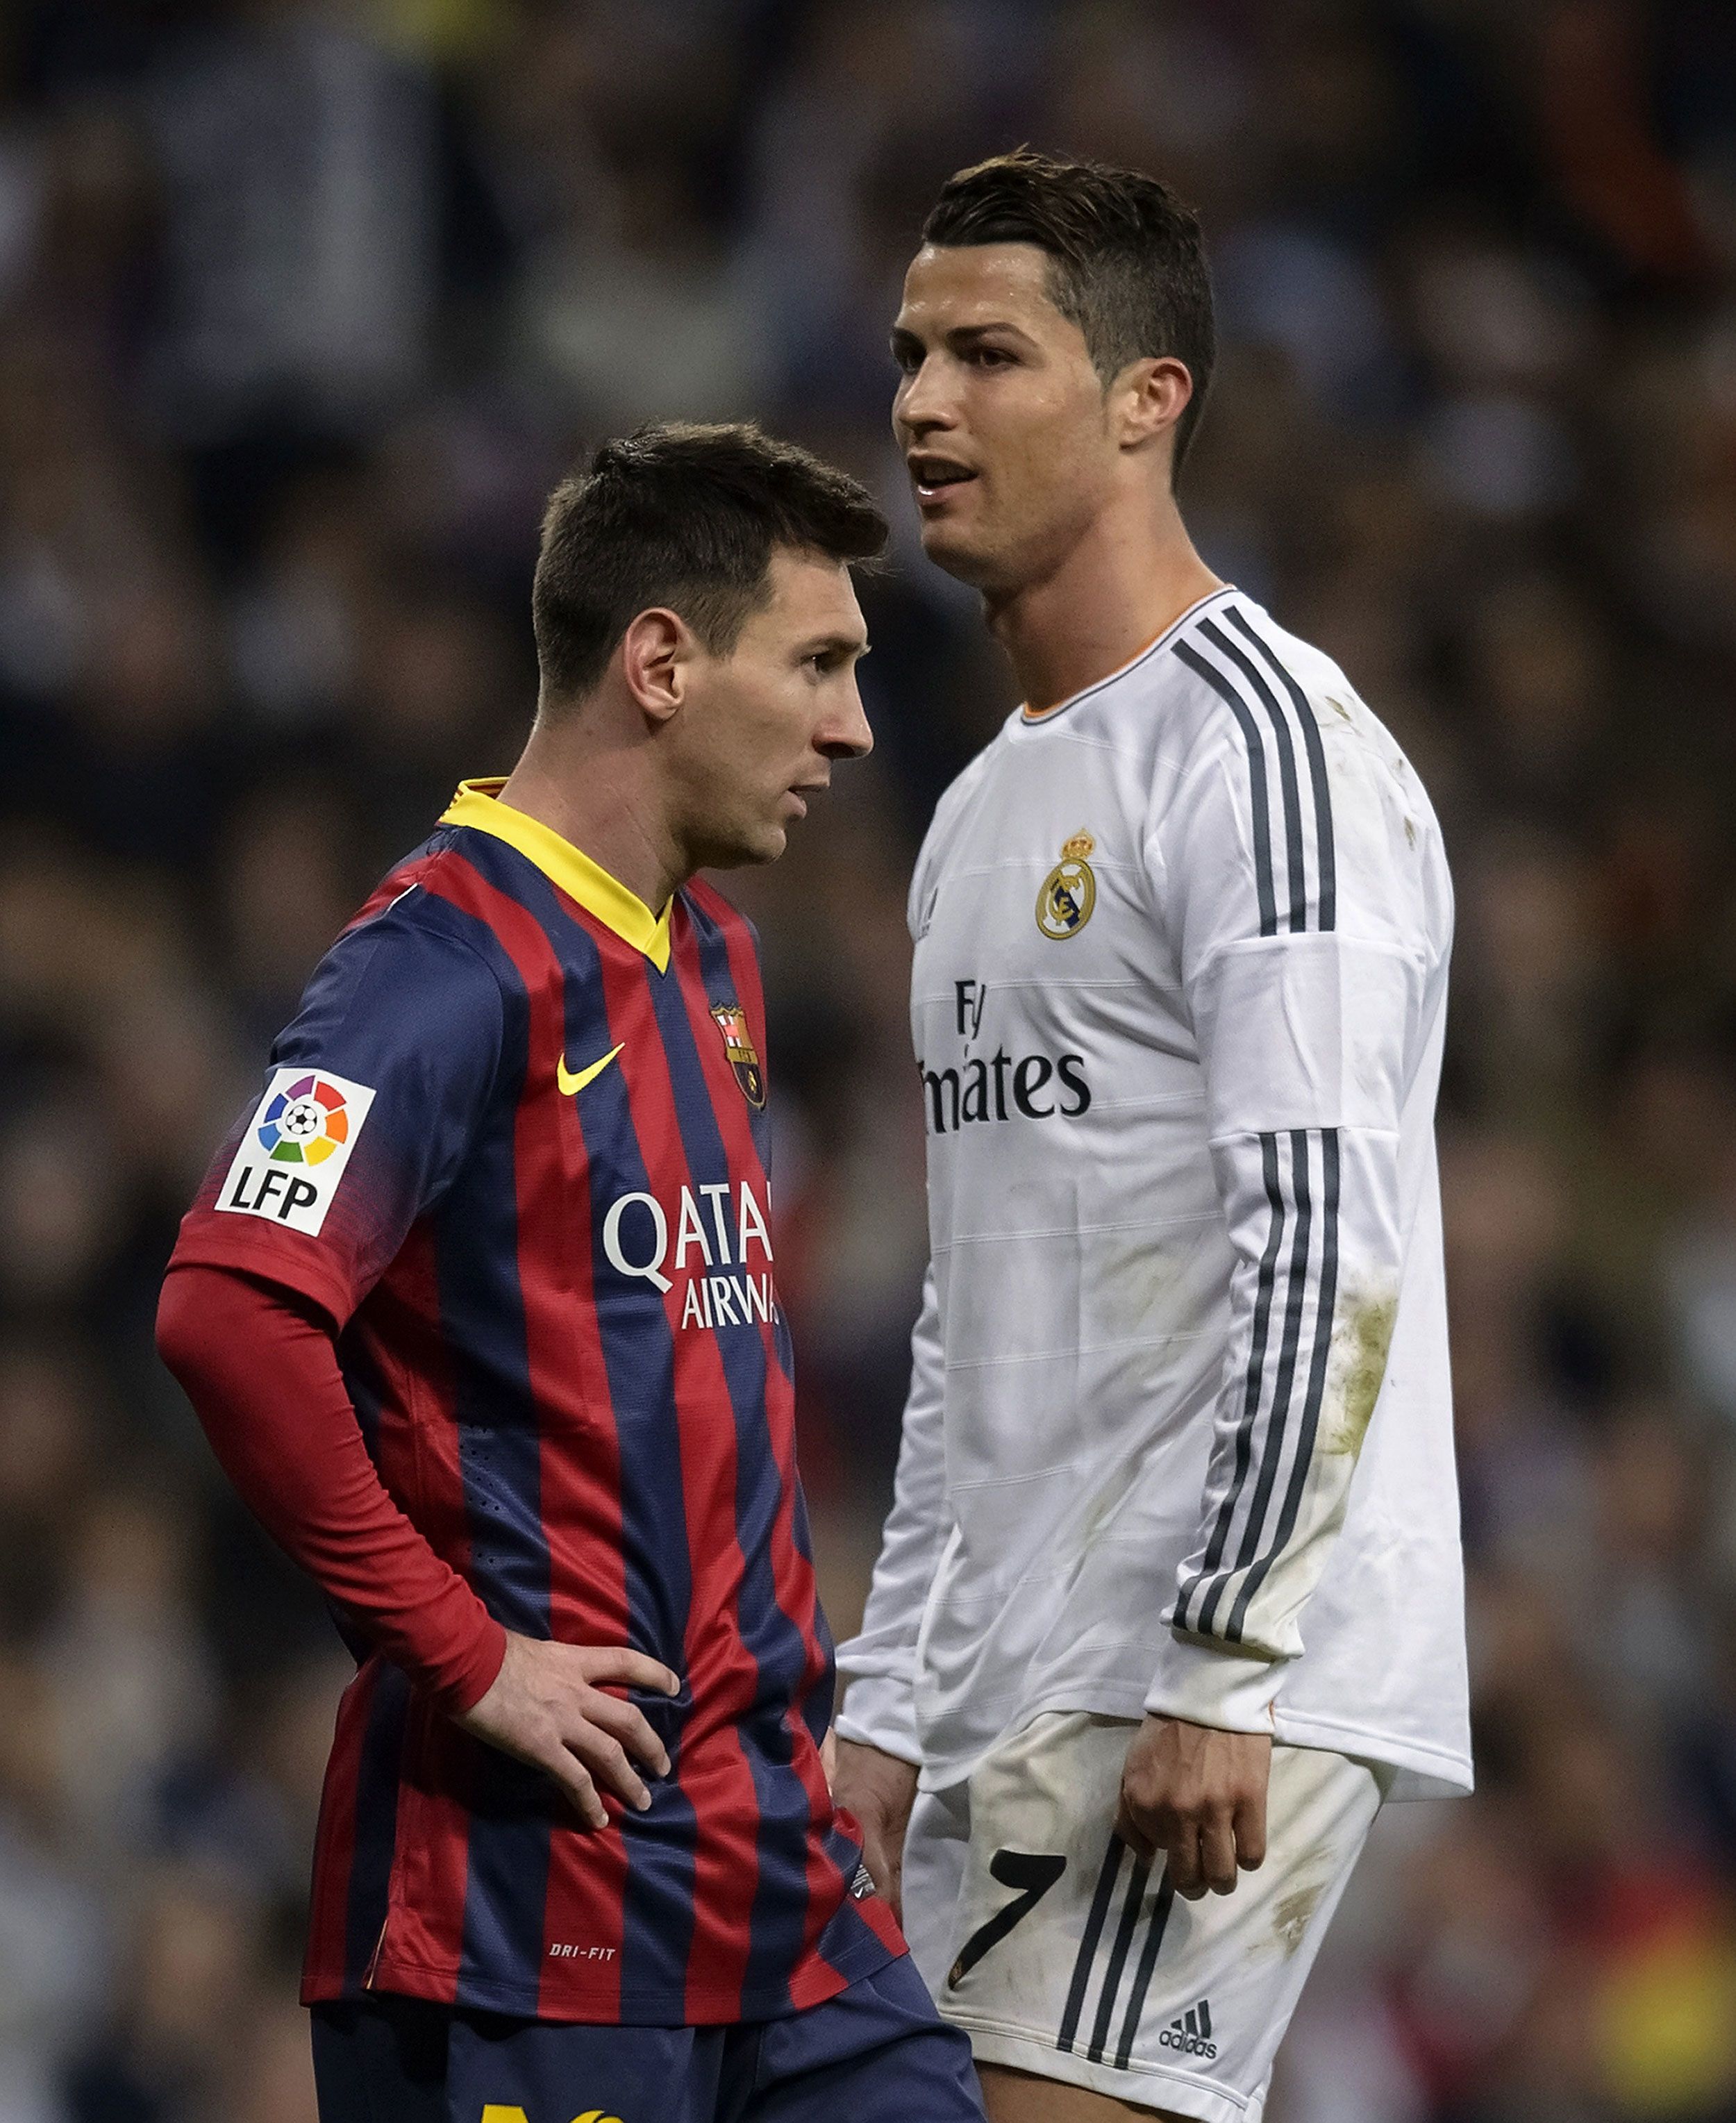 Superstar Footballers, Cristiano Ronaldo and Lionel Messi Pose